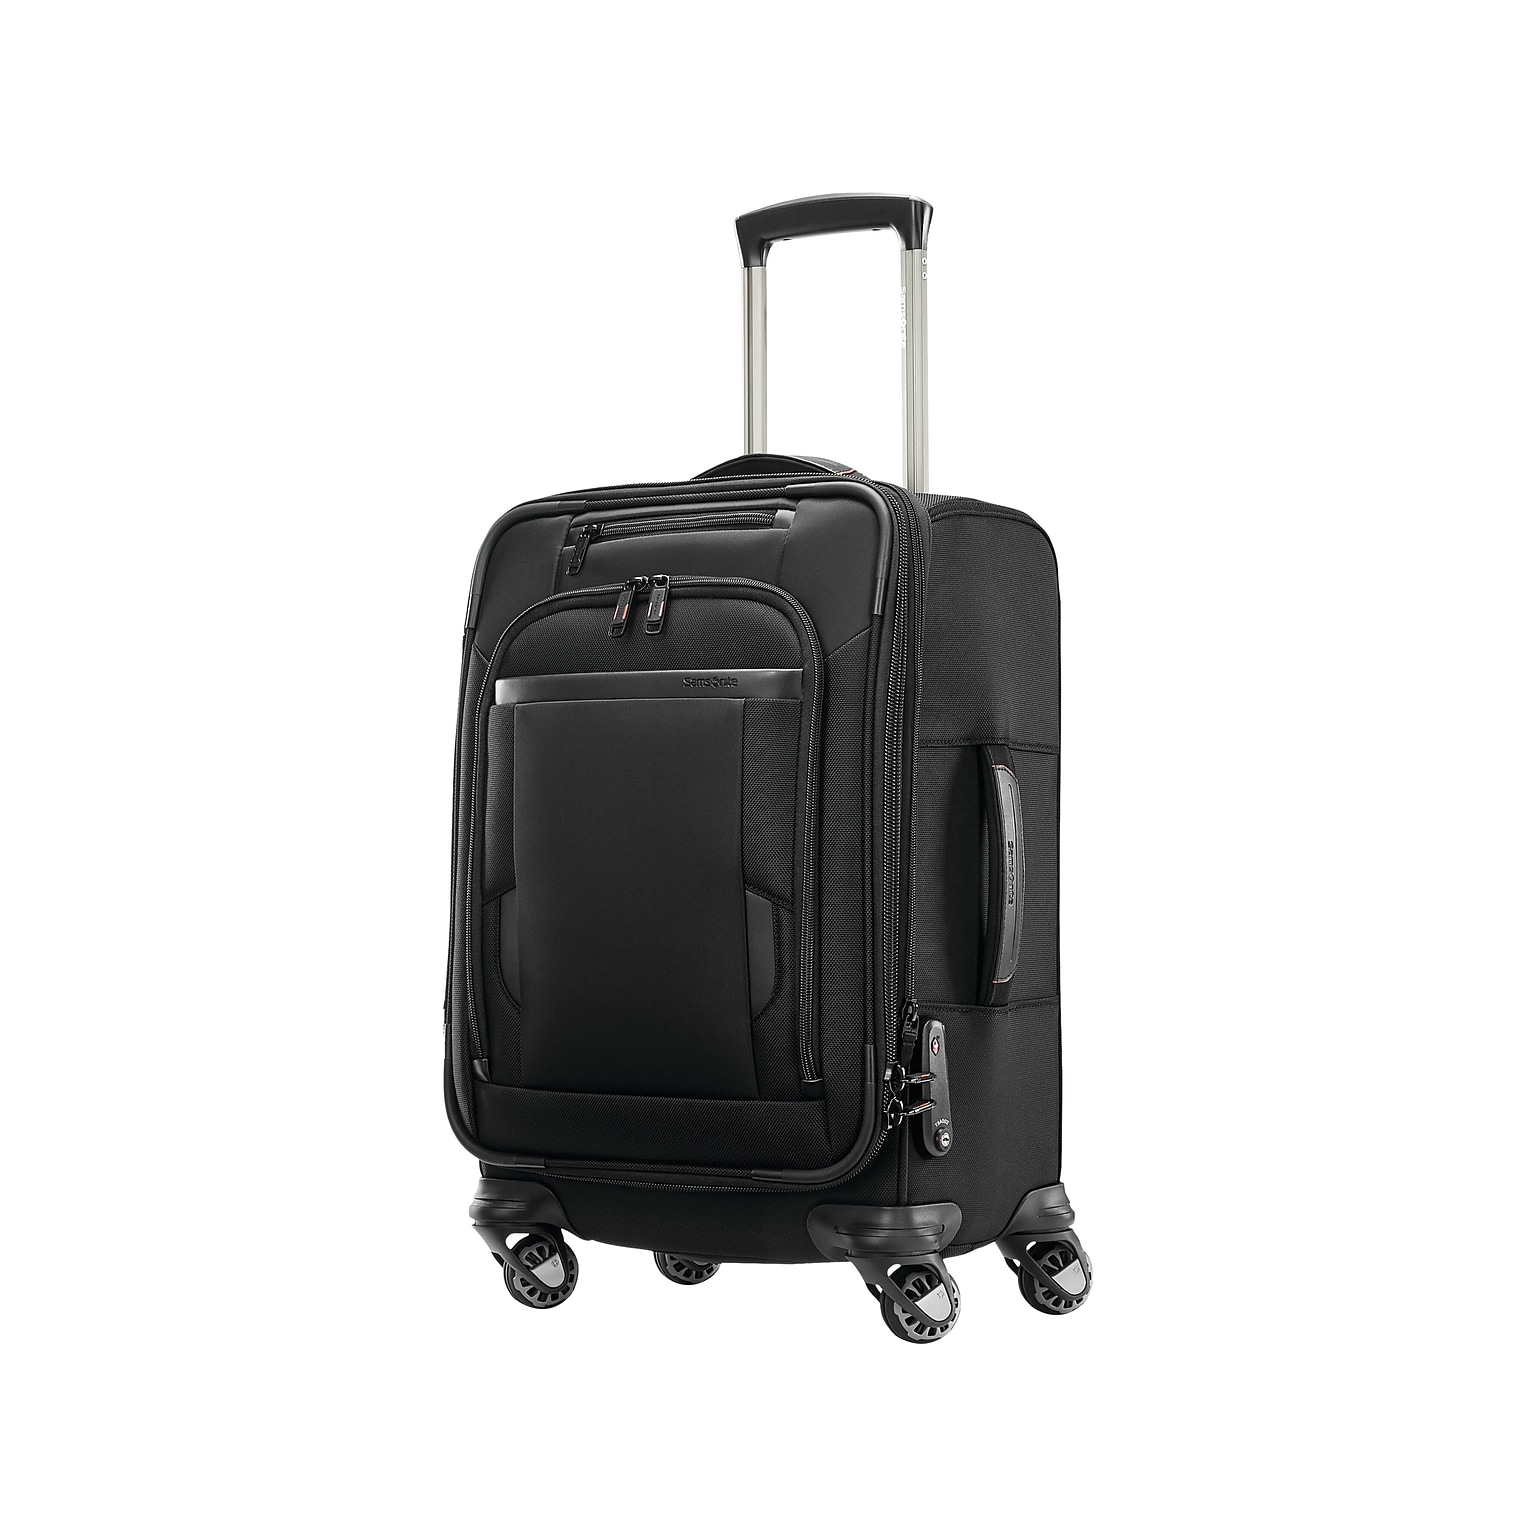 Samsonite 22.4 Carry-On Suitcase, 4-Wheeled Spinner, TSA Checkpoint Friendly, Black (127373-1041)